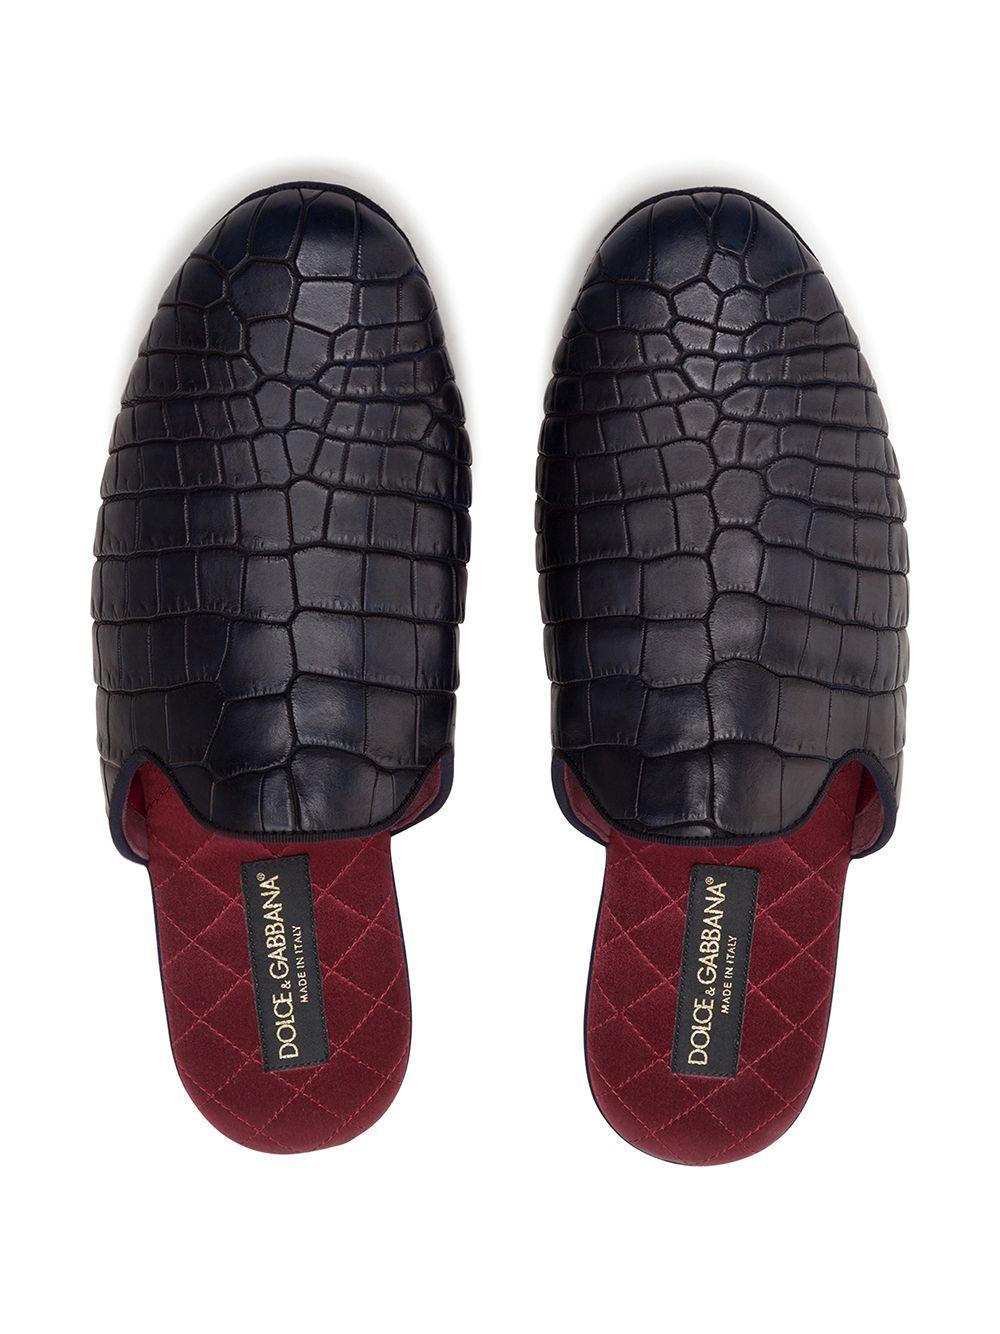 Dolce & Gabbana Roma Crocodile Leather Sneakers